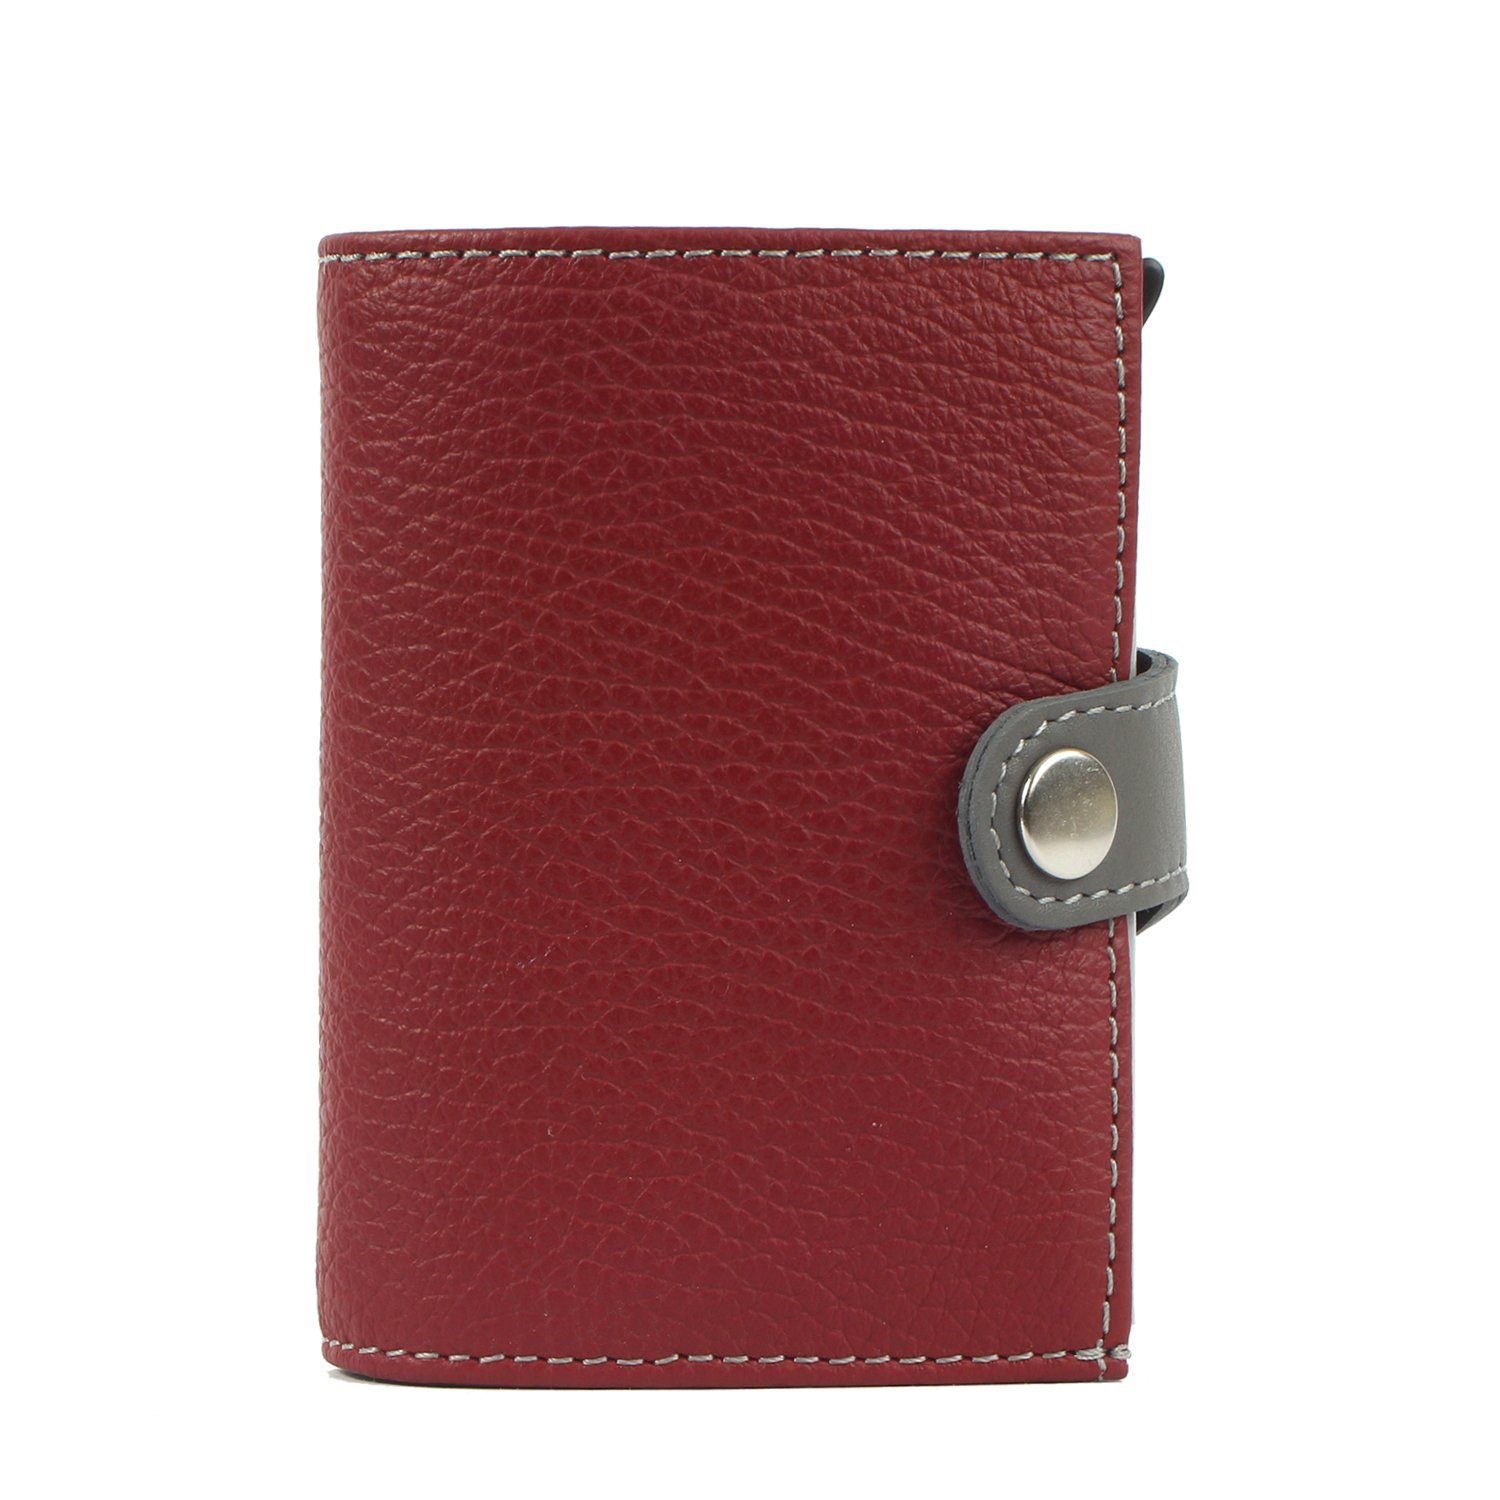 Margelisch Mini Geldbörse noonyu double RFID Upcycling leather, Leder karminrot Kreditkartenbörse aus